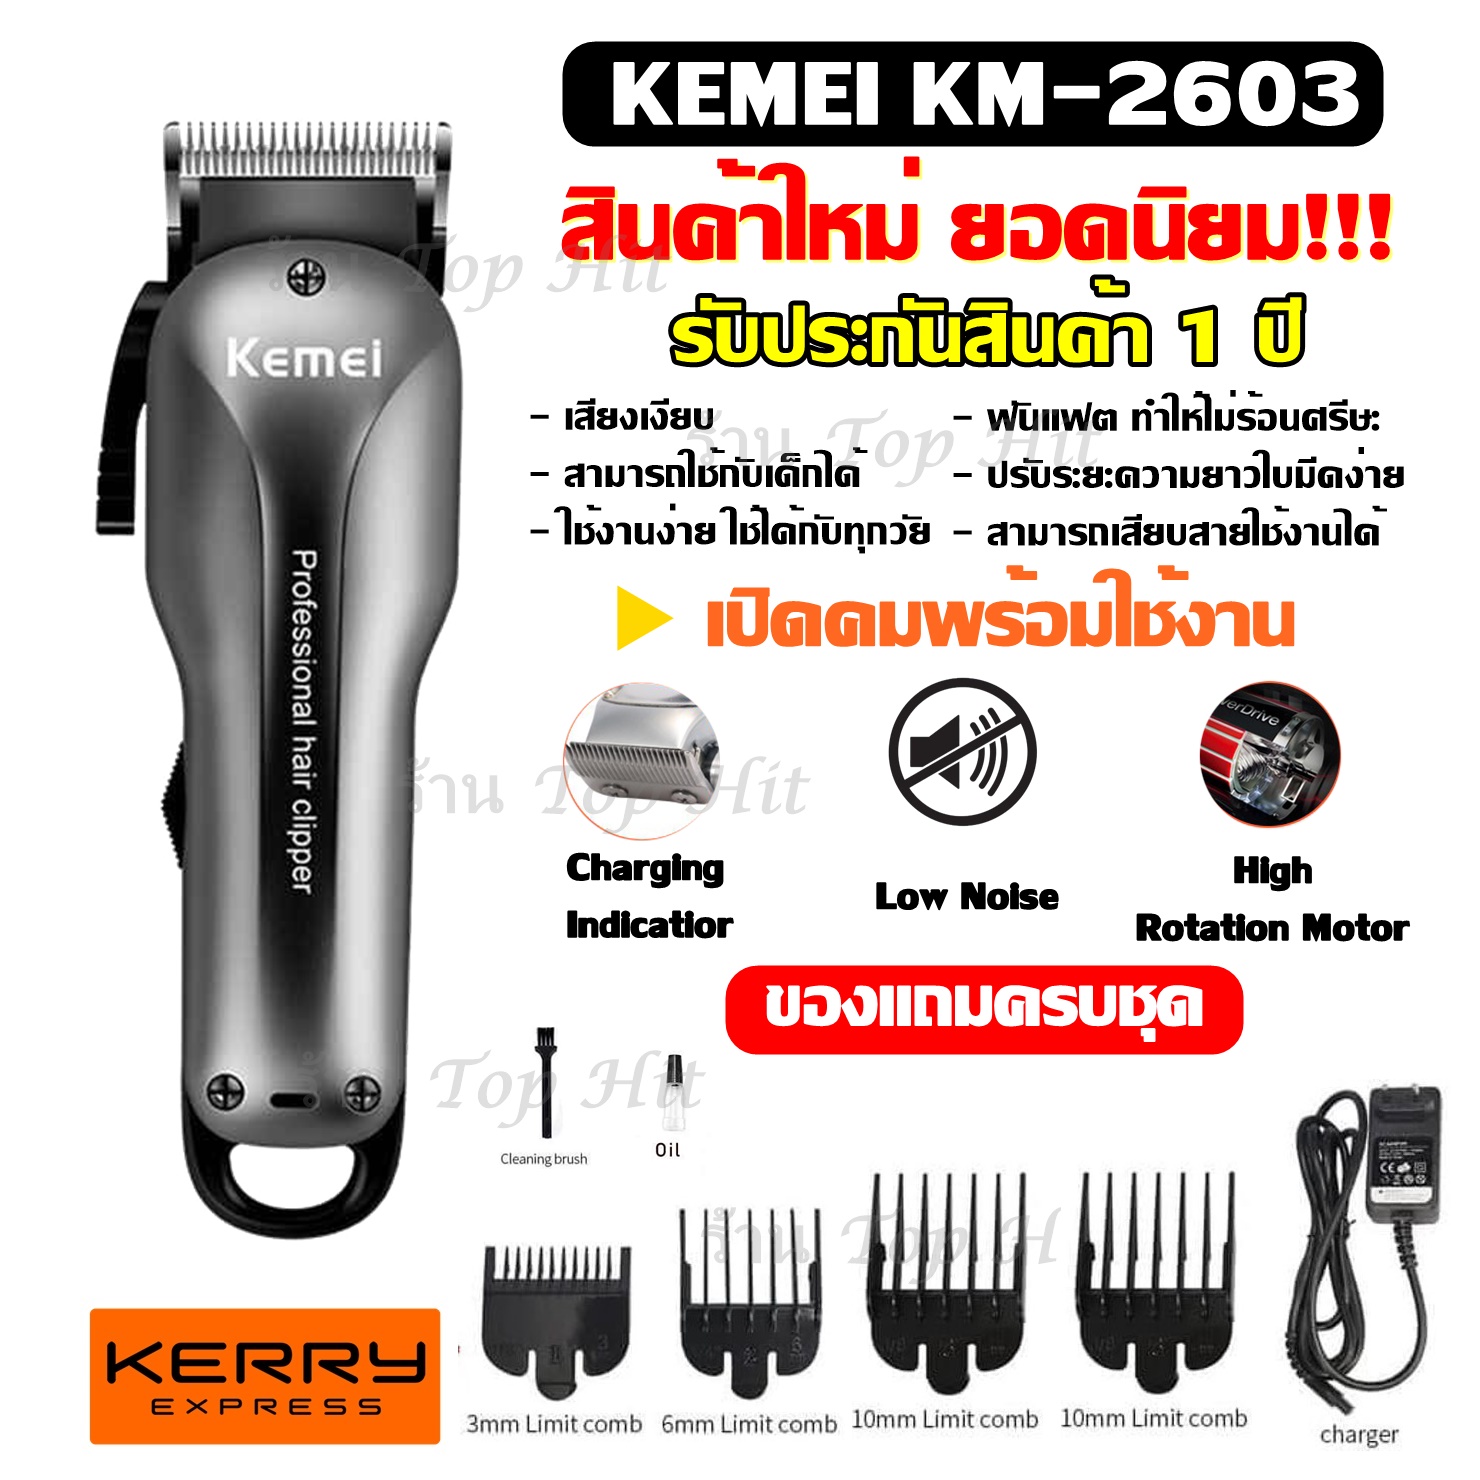 Plug 8 Shop ค่าส่งถูก!!! Kemei KM2603 ((ใหม่ล่าสุด ส่งเร็ว!!)) แบตเตอเลี่ยนตัดผมไร้สาย ปัตตาเลี่ยนตัดผมชายและเด็ก แบตตาเลี่ยนแกะลาย แบตเตอร์เลี่ยนไฟฟ้า อุปกรณ์ตัดผม New Professional Hair Salon Hair Clipper Powerful Electric Cordless Hair Trimmer KM-2603